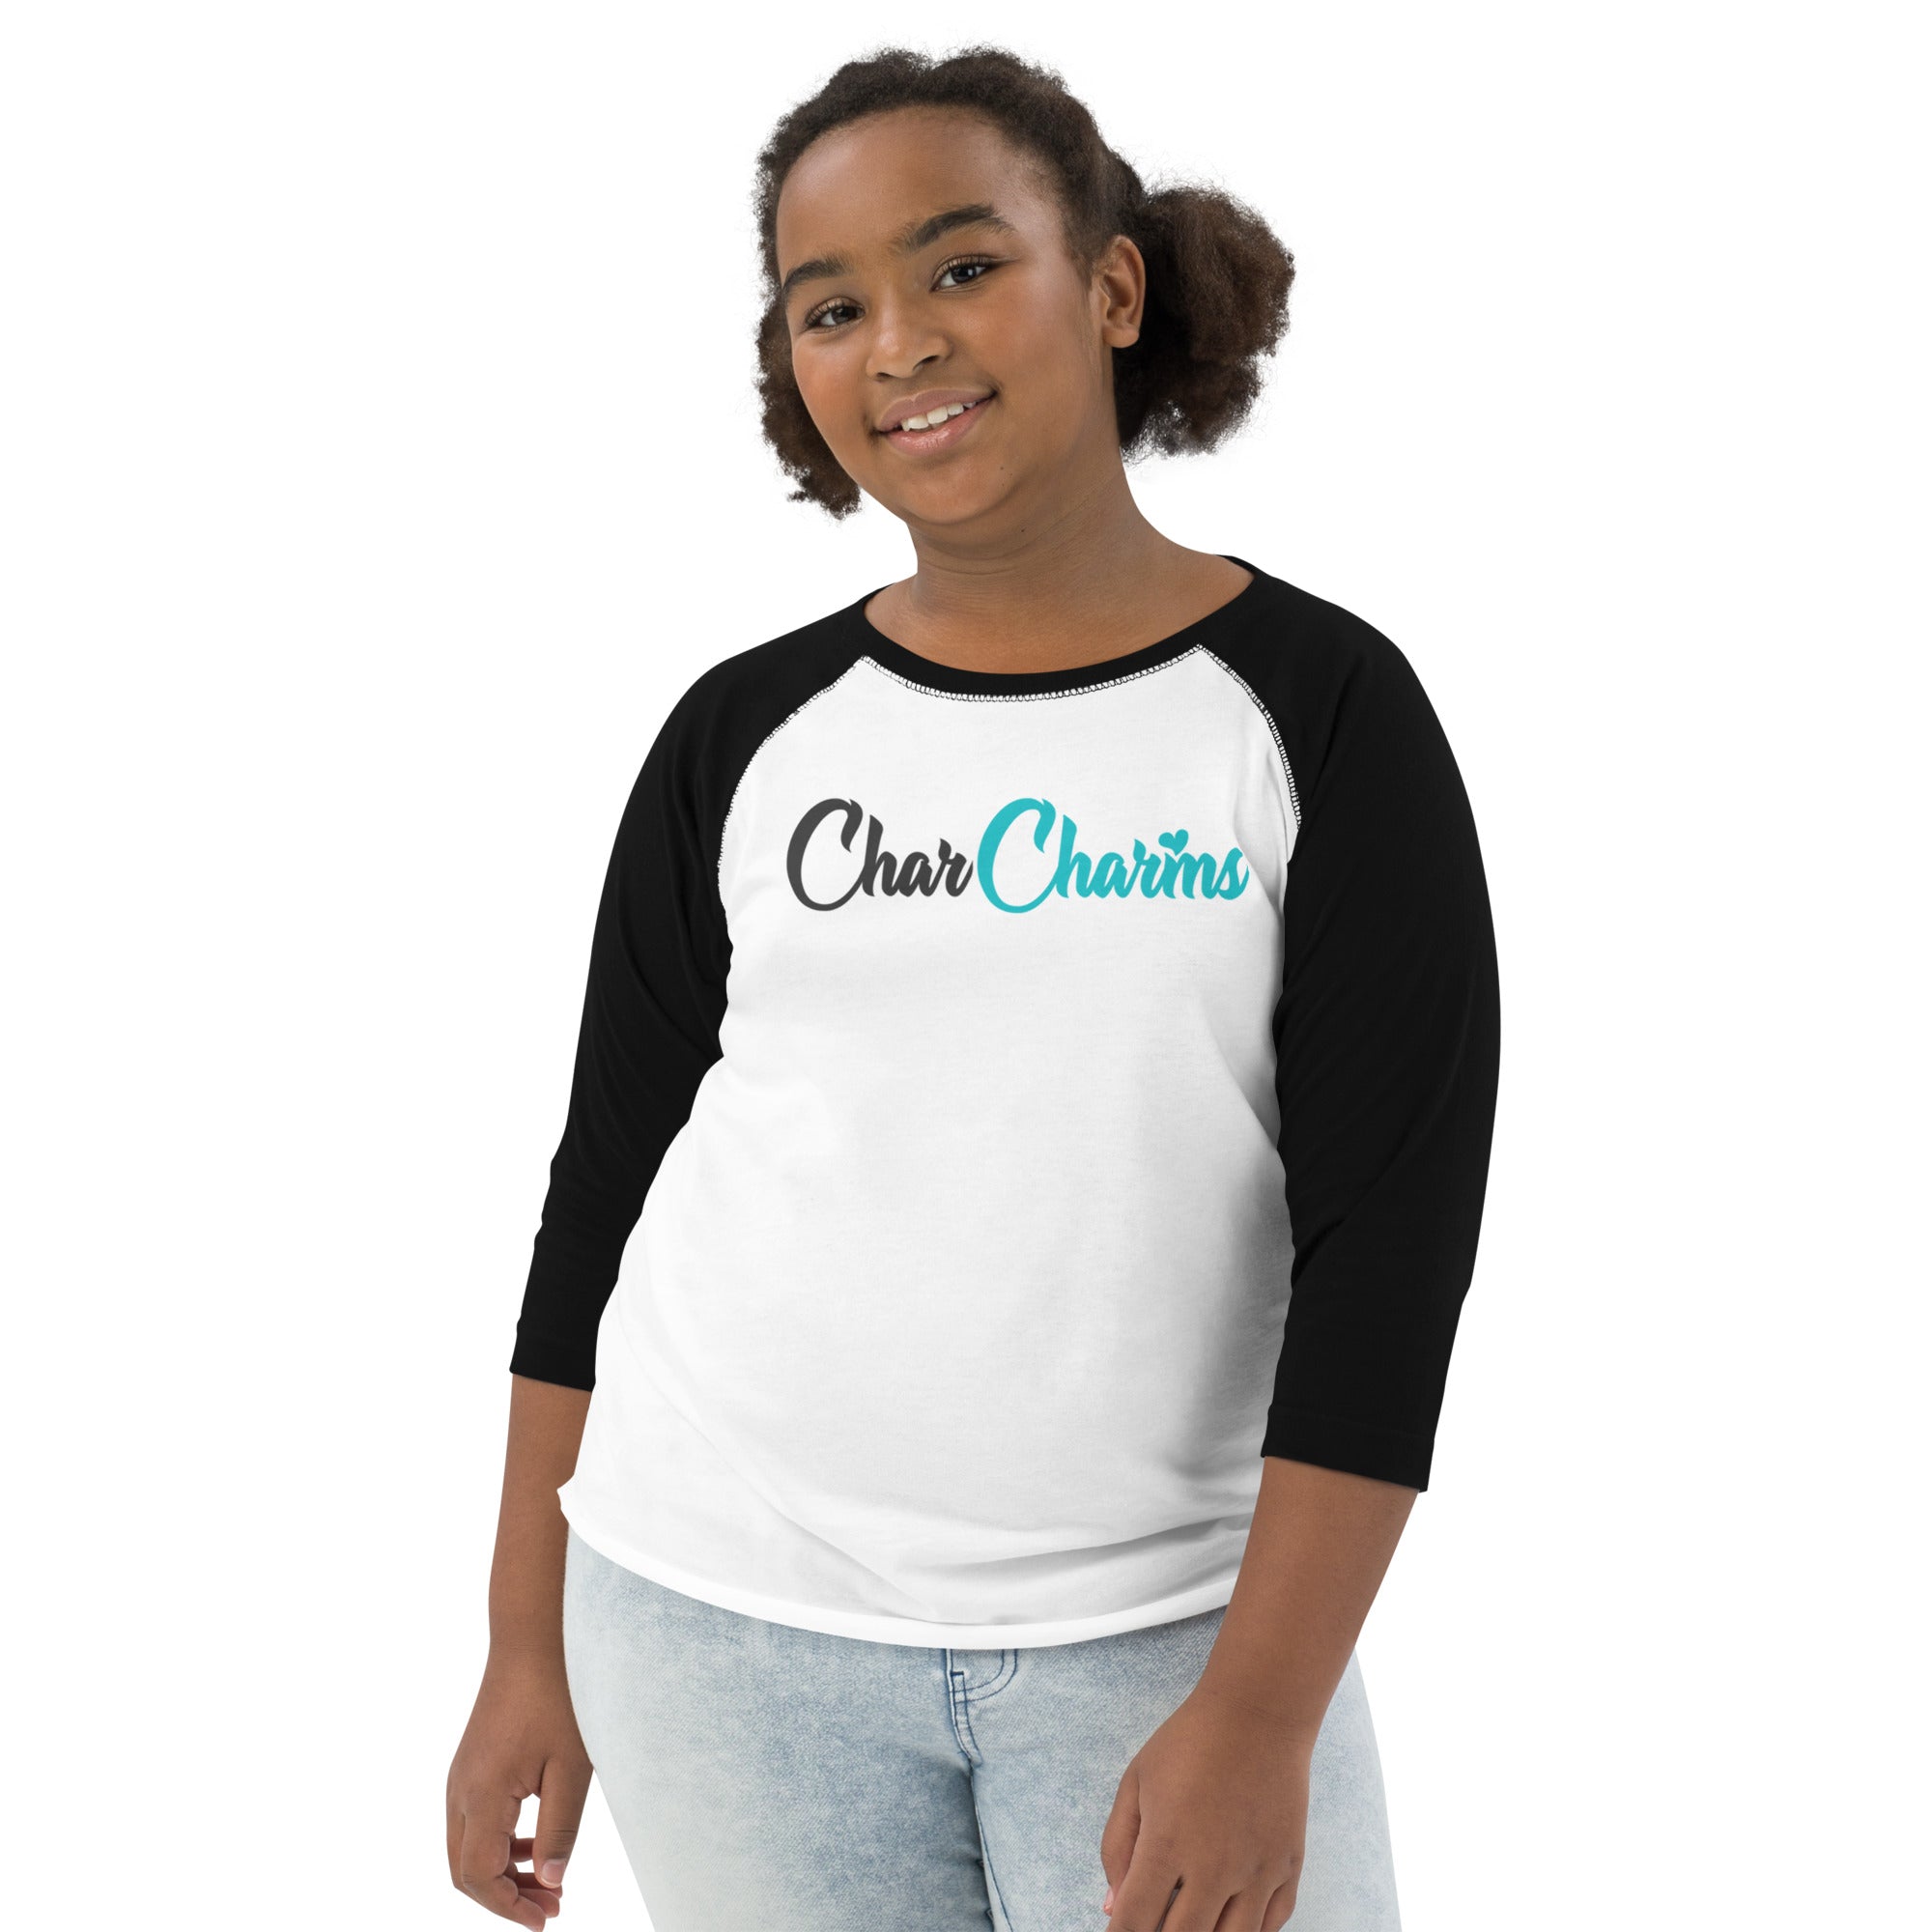 CharCharms Merchandise Kids Baseball Tee Tshirt